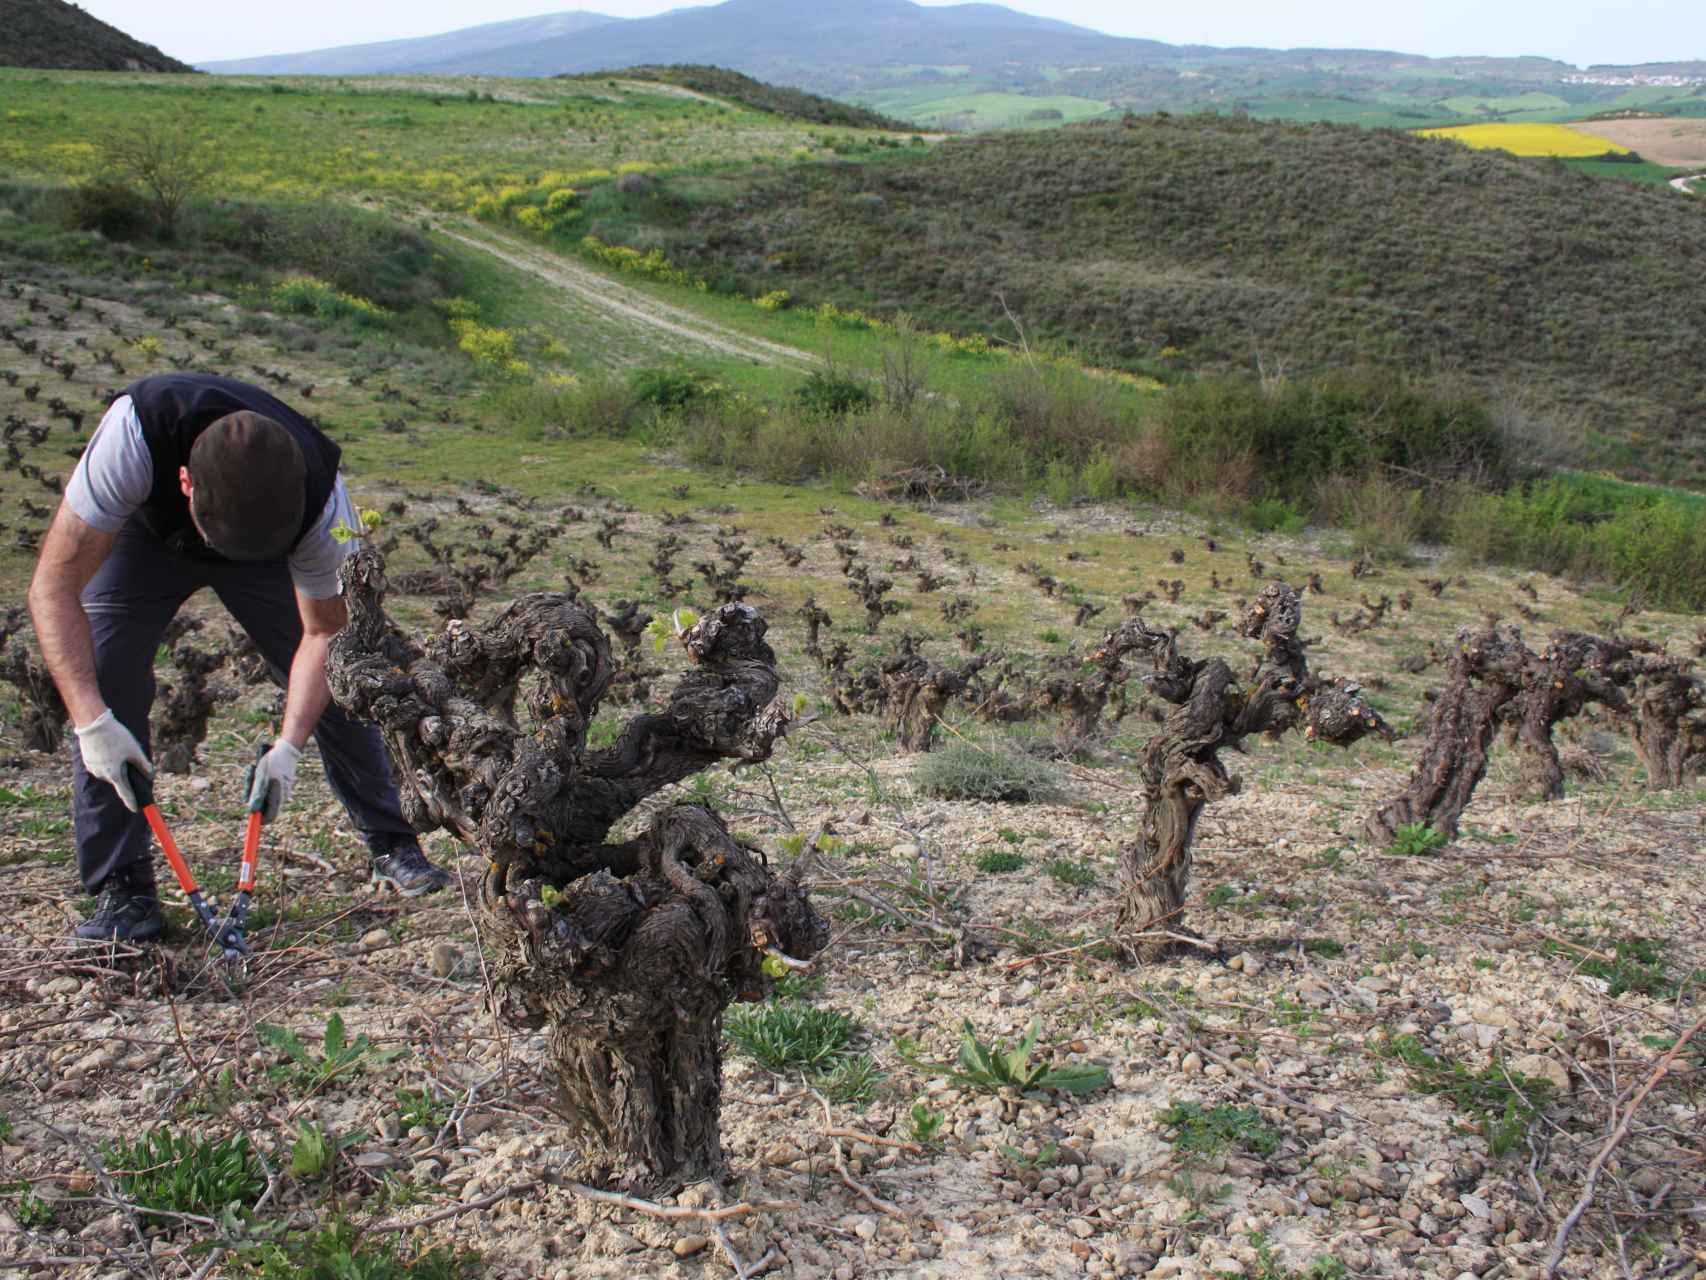 La viticultura se realiza de manera completamente natural